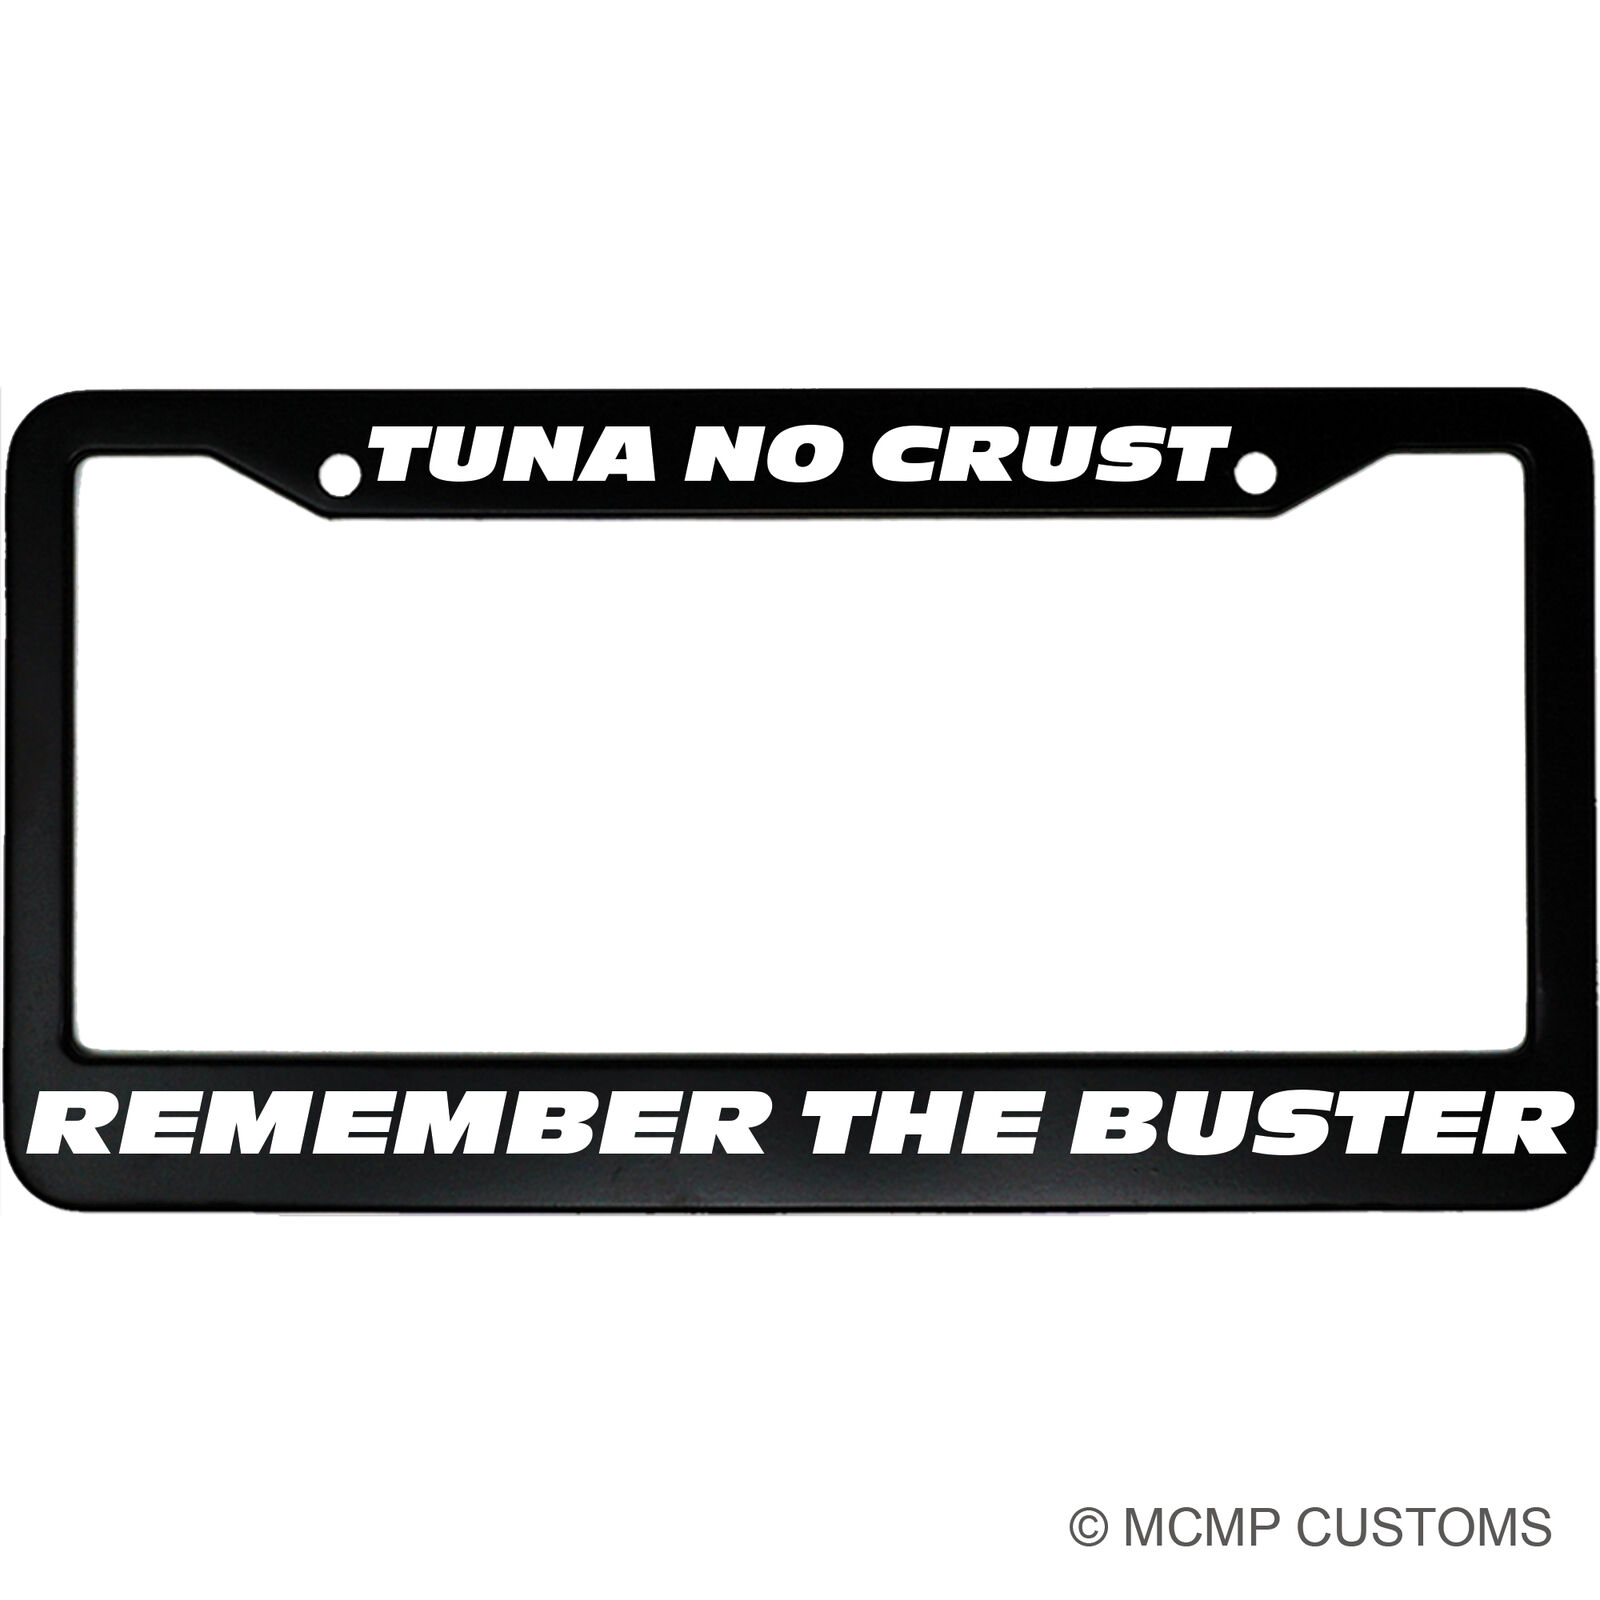 Tuna No Crust, Remember The Buster Paul Walker Aluminum Car License Plate Frame